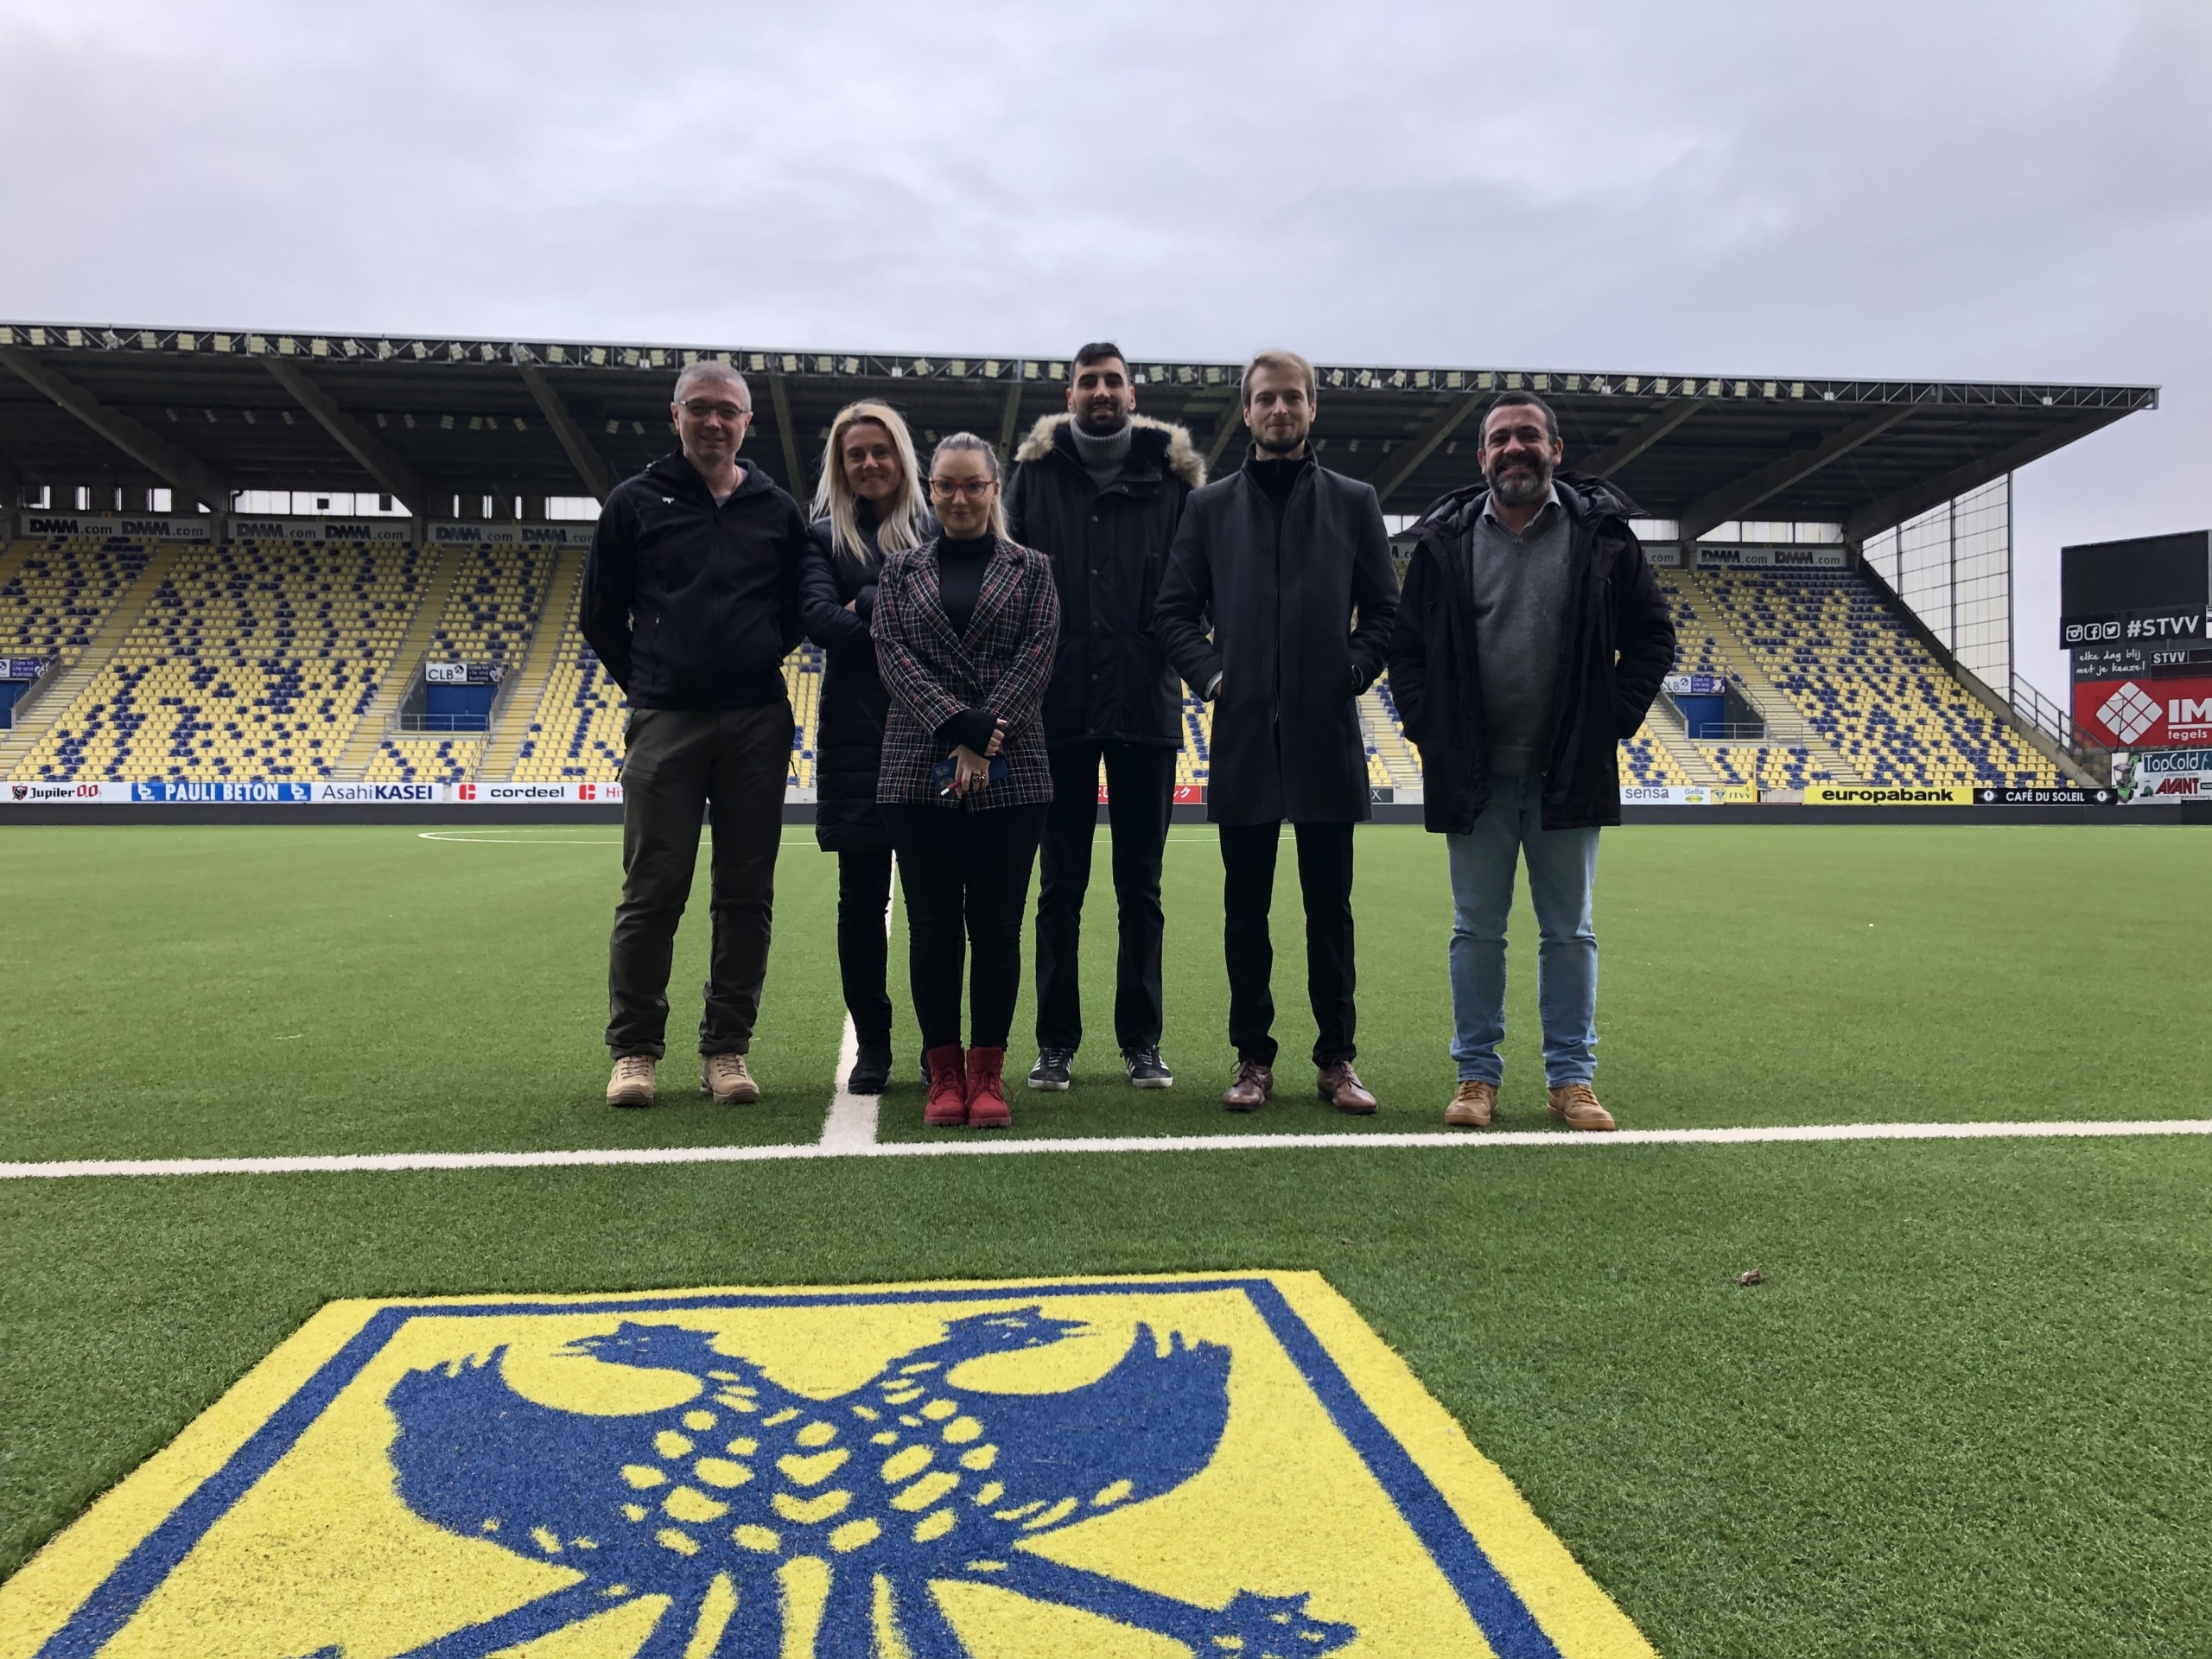 5th Steering Committee of the Erasmus+ GOALS project in STVV’s Stayen stadium